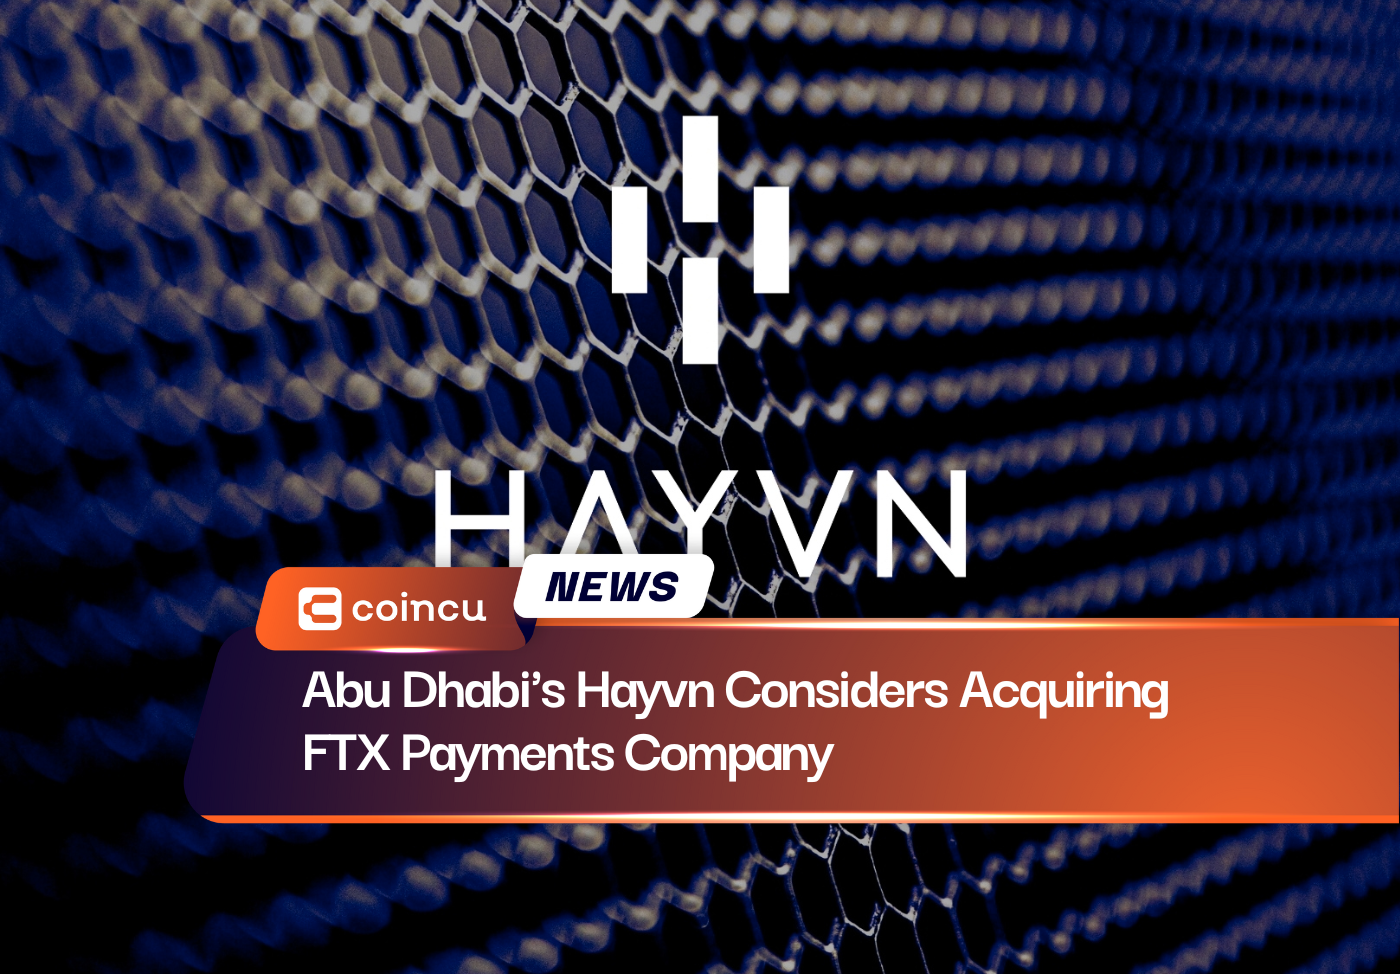 Abu Dhabi's Hayvn Considers Acquiring FTX Payments Company